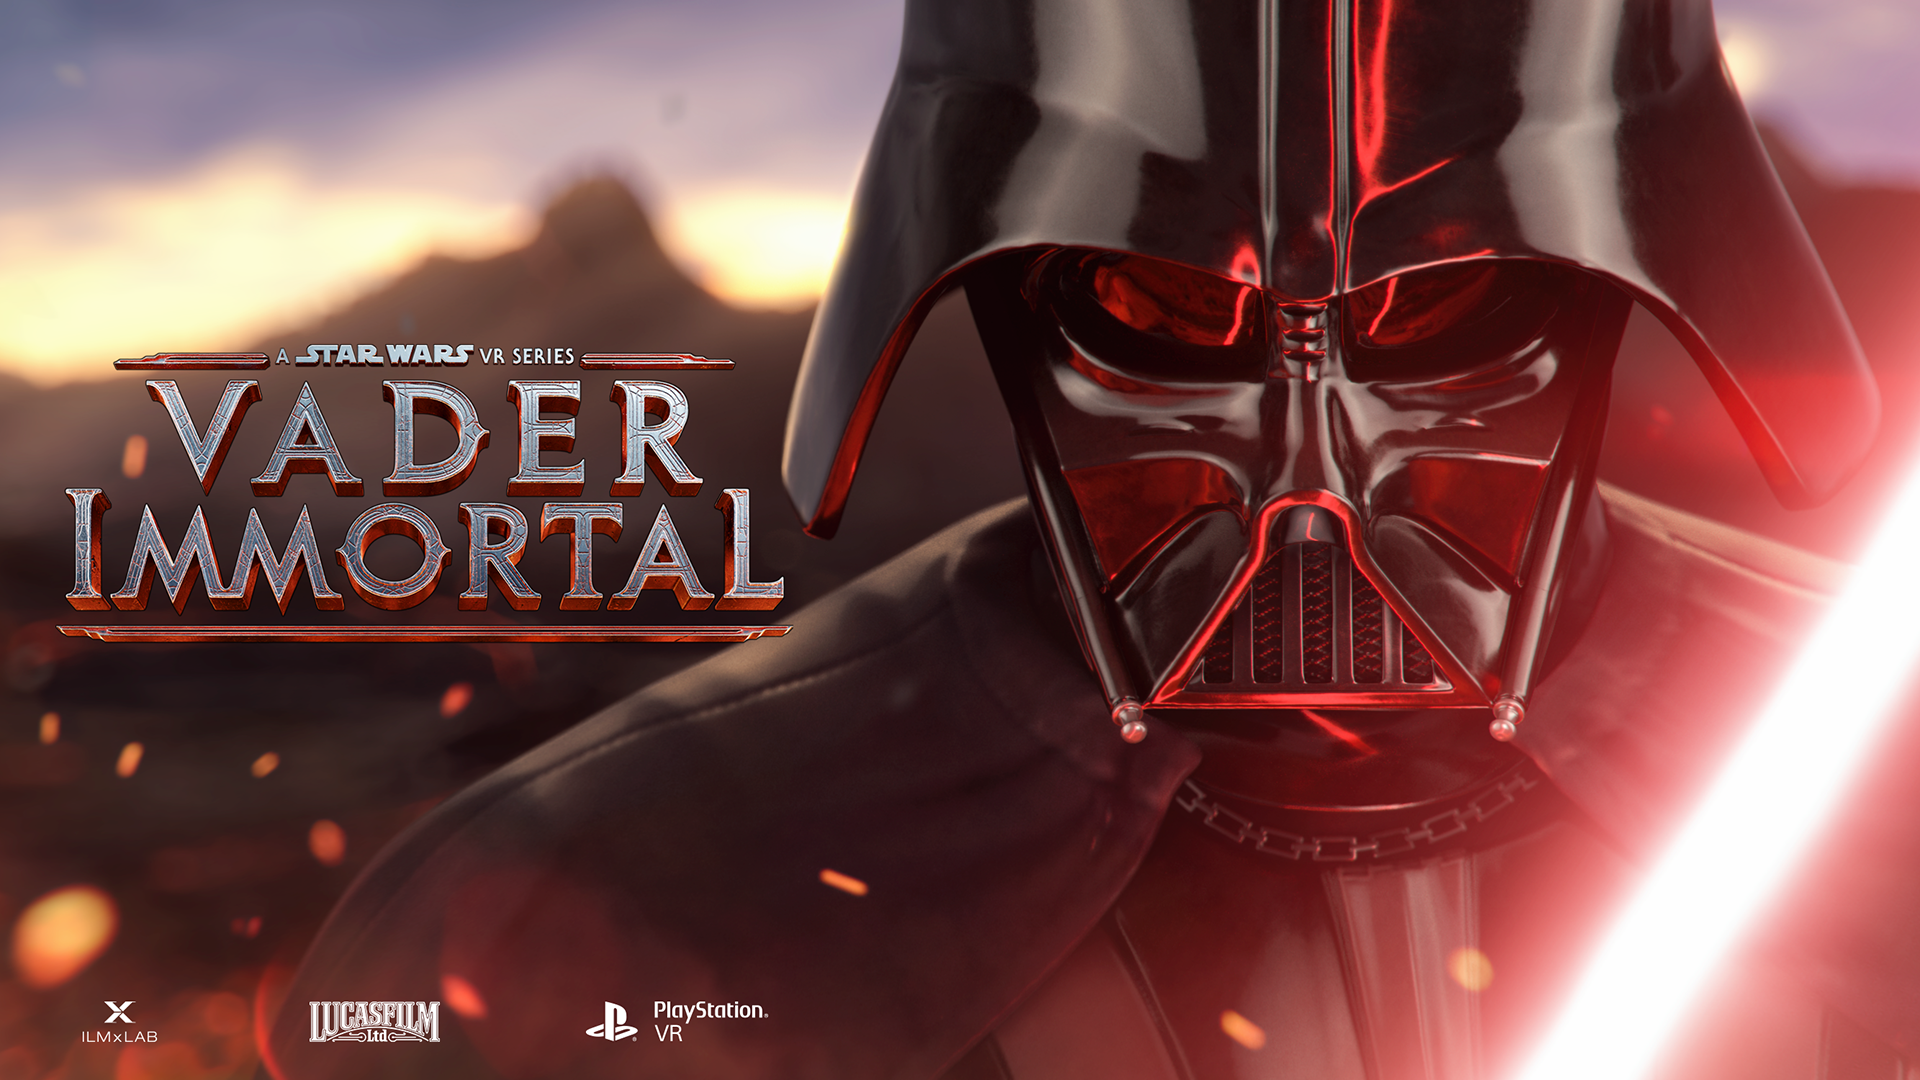 Vader Immortal poster for Playstation VR